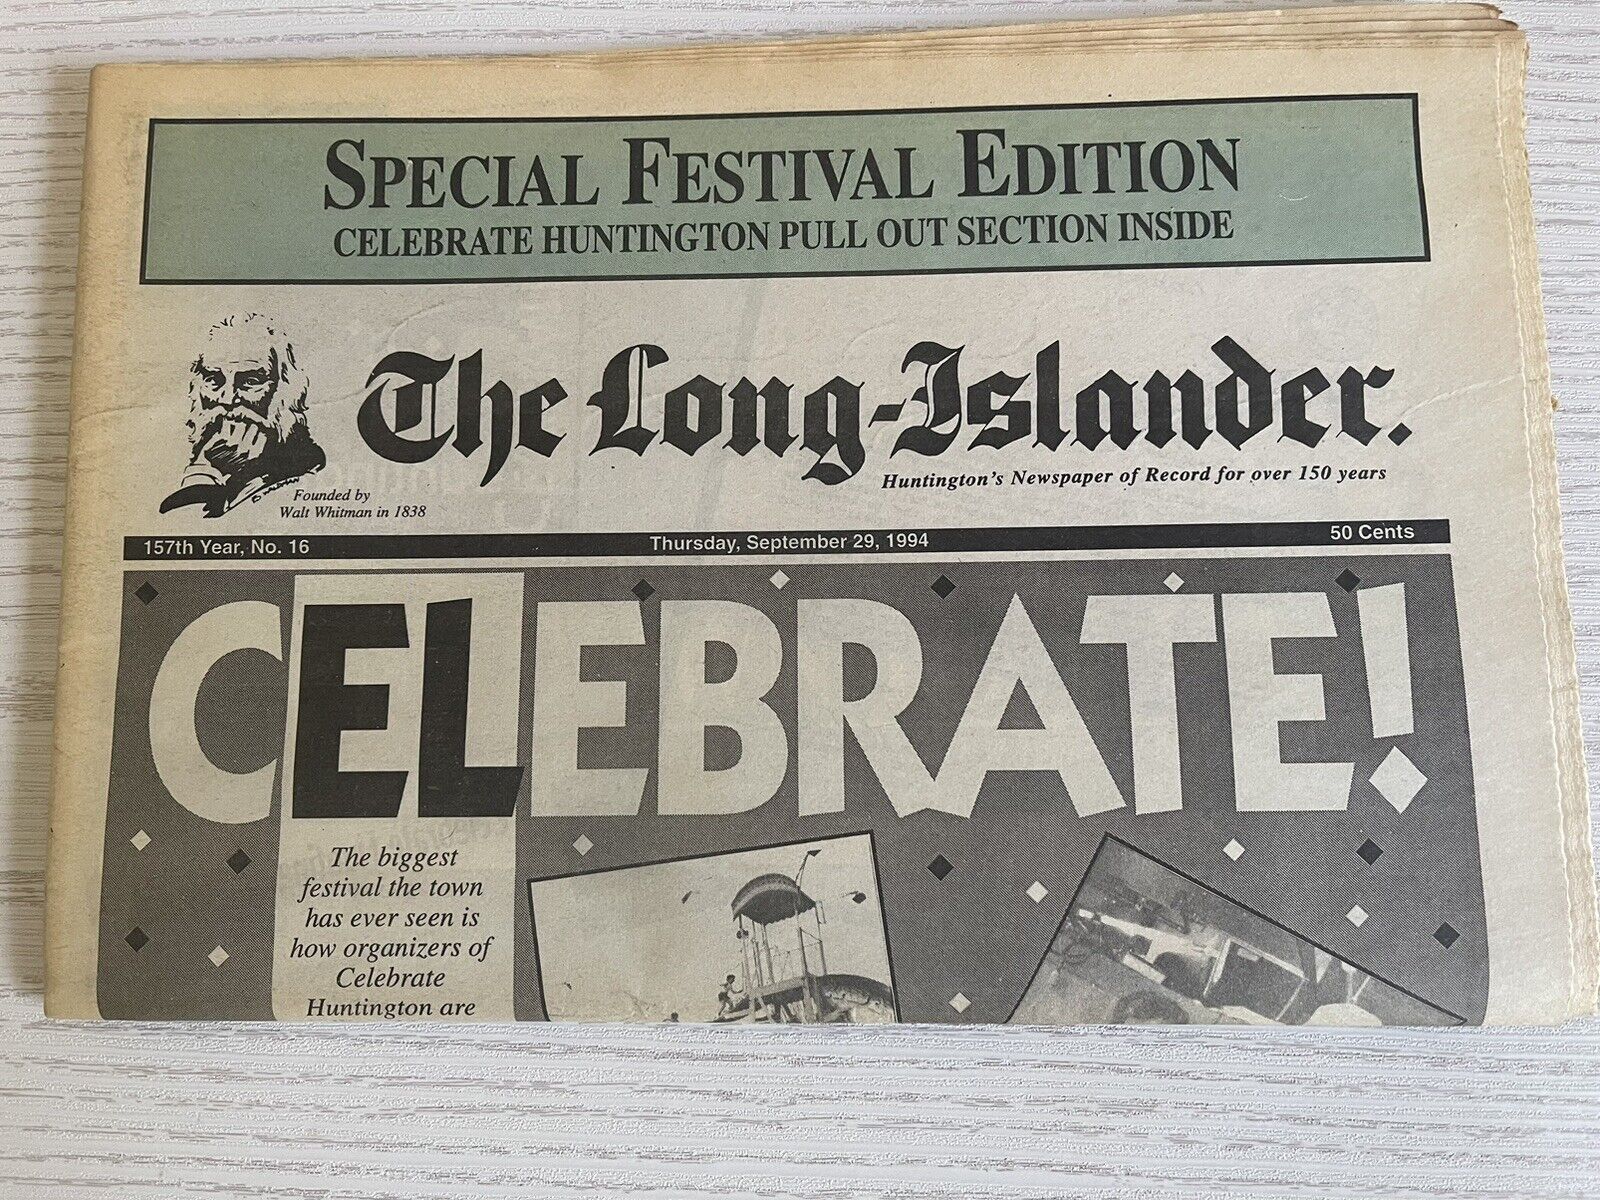 The Long Islander, Huntington Newspaper Sept. 29, 1994